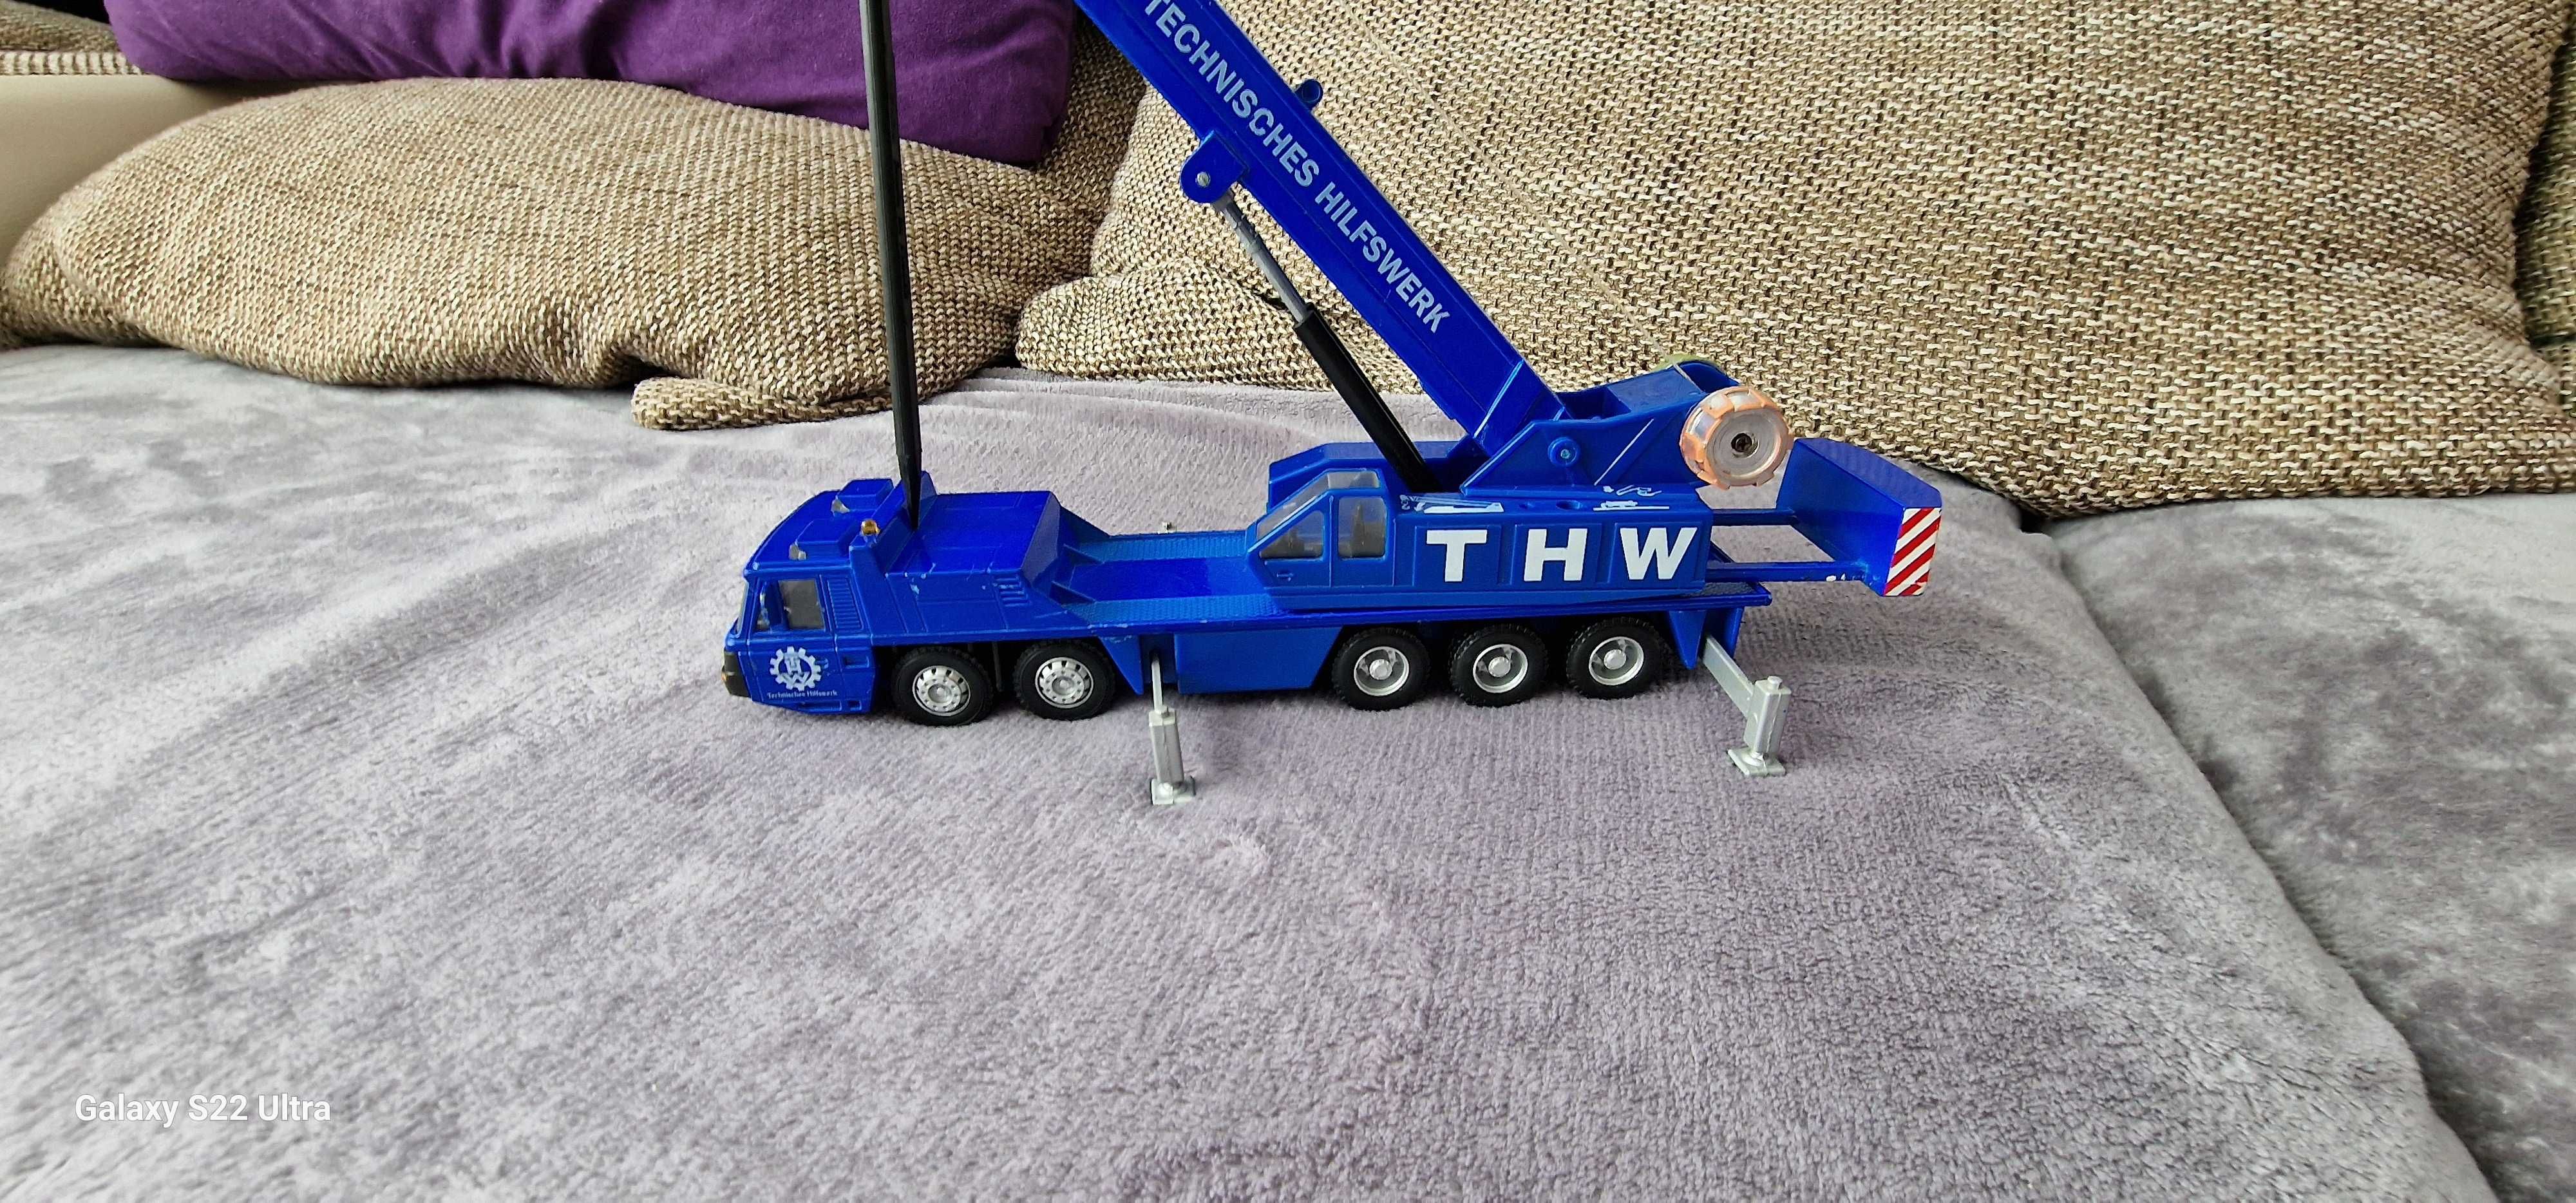 Maisto - THW Super Telescopic Crane Truck - 28 cm